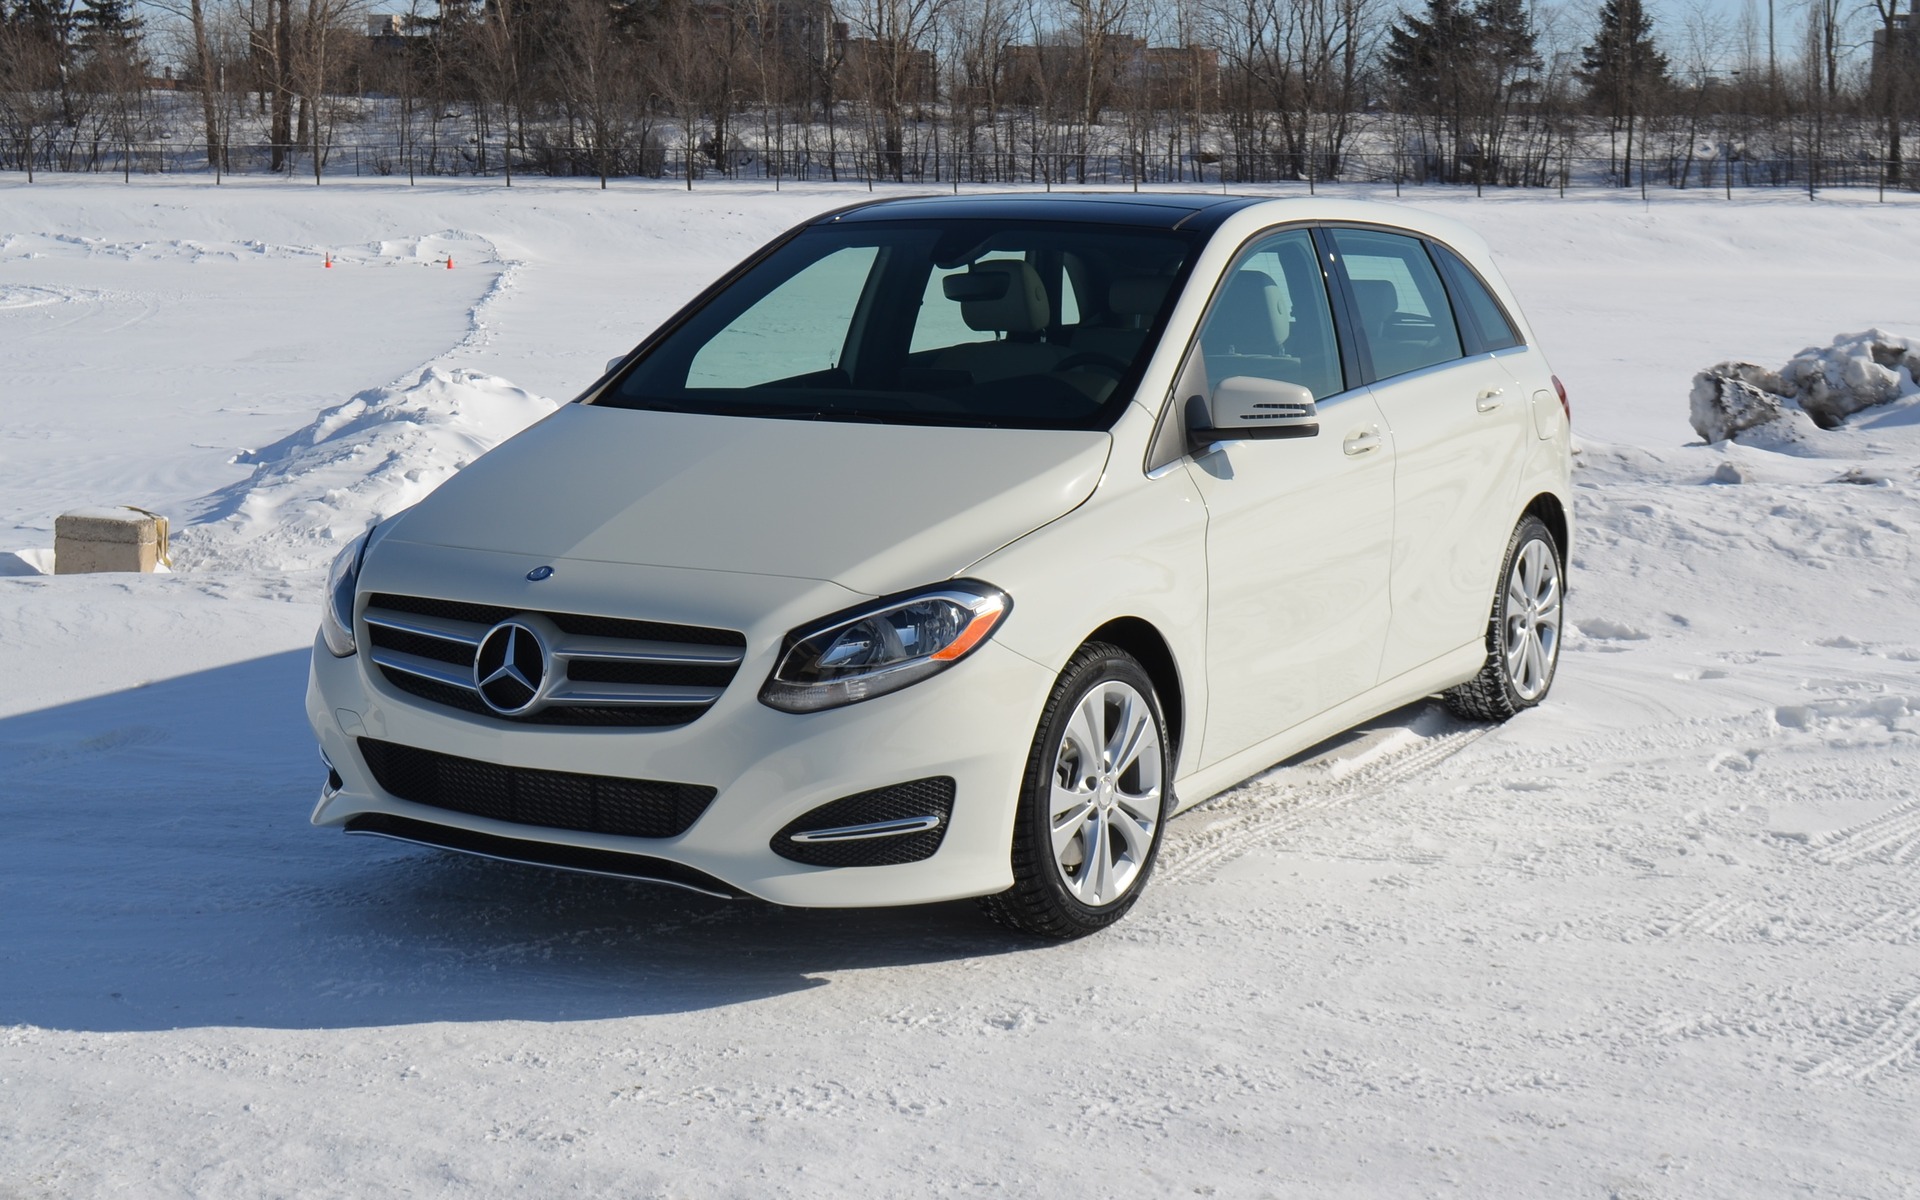 Mercedes cla 250 in snow #4